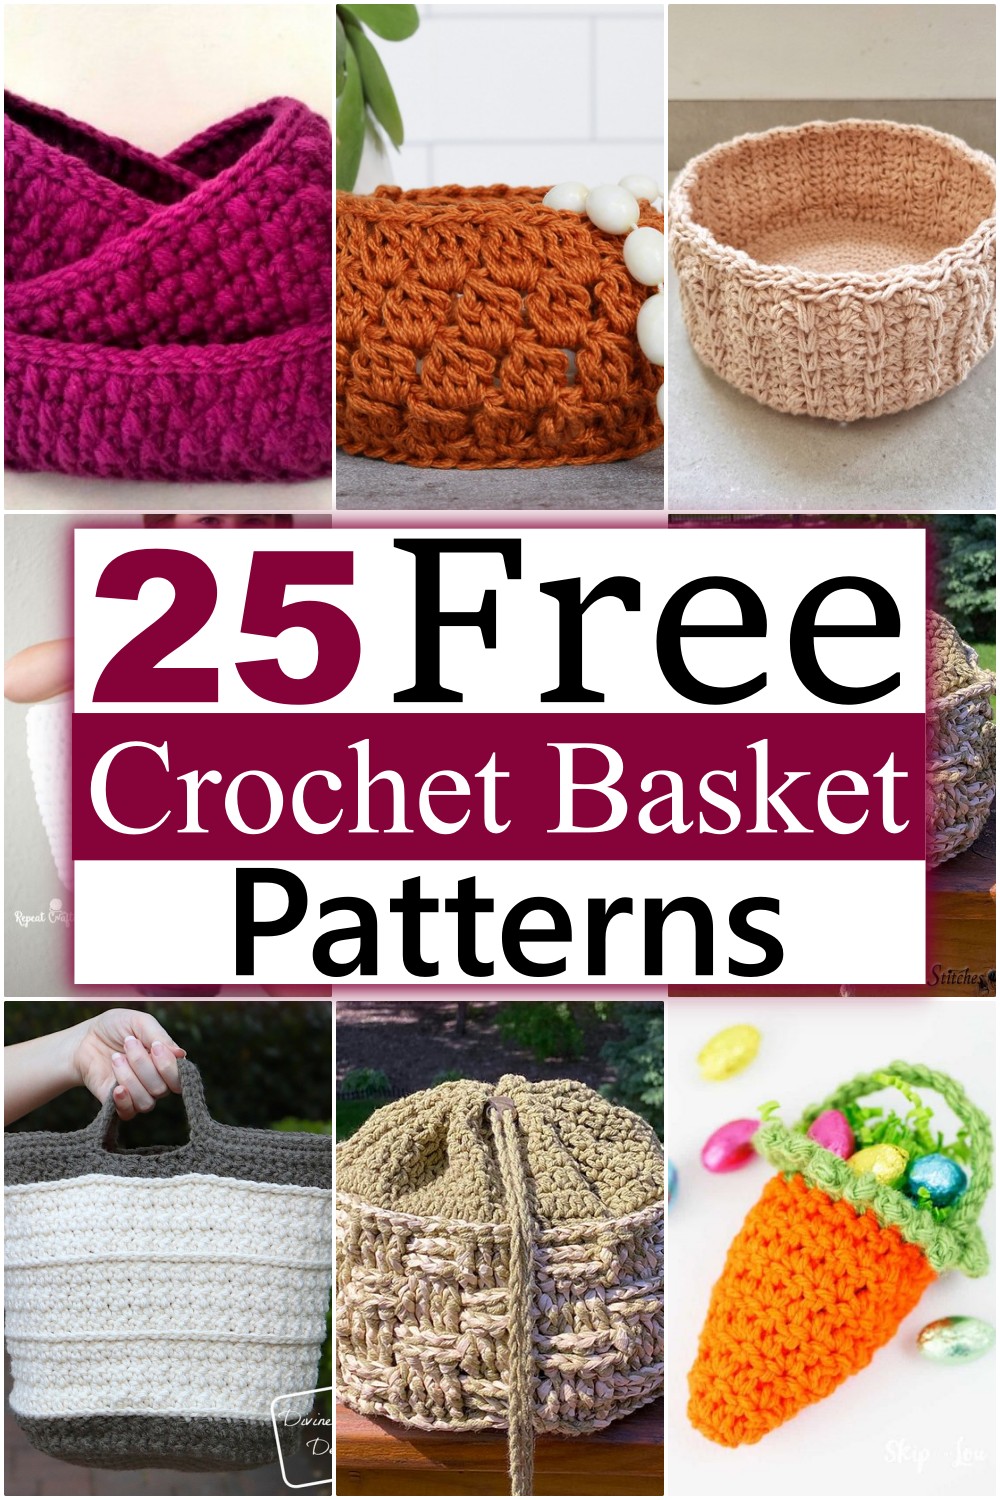 Free Crochet Basket Patterns